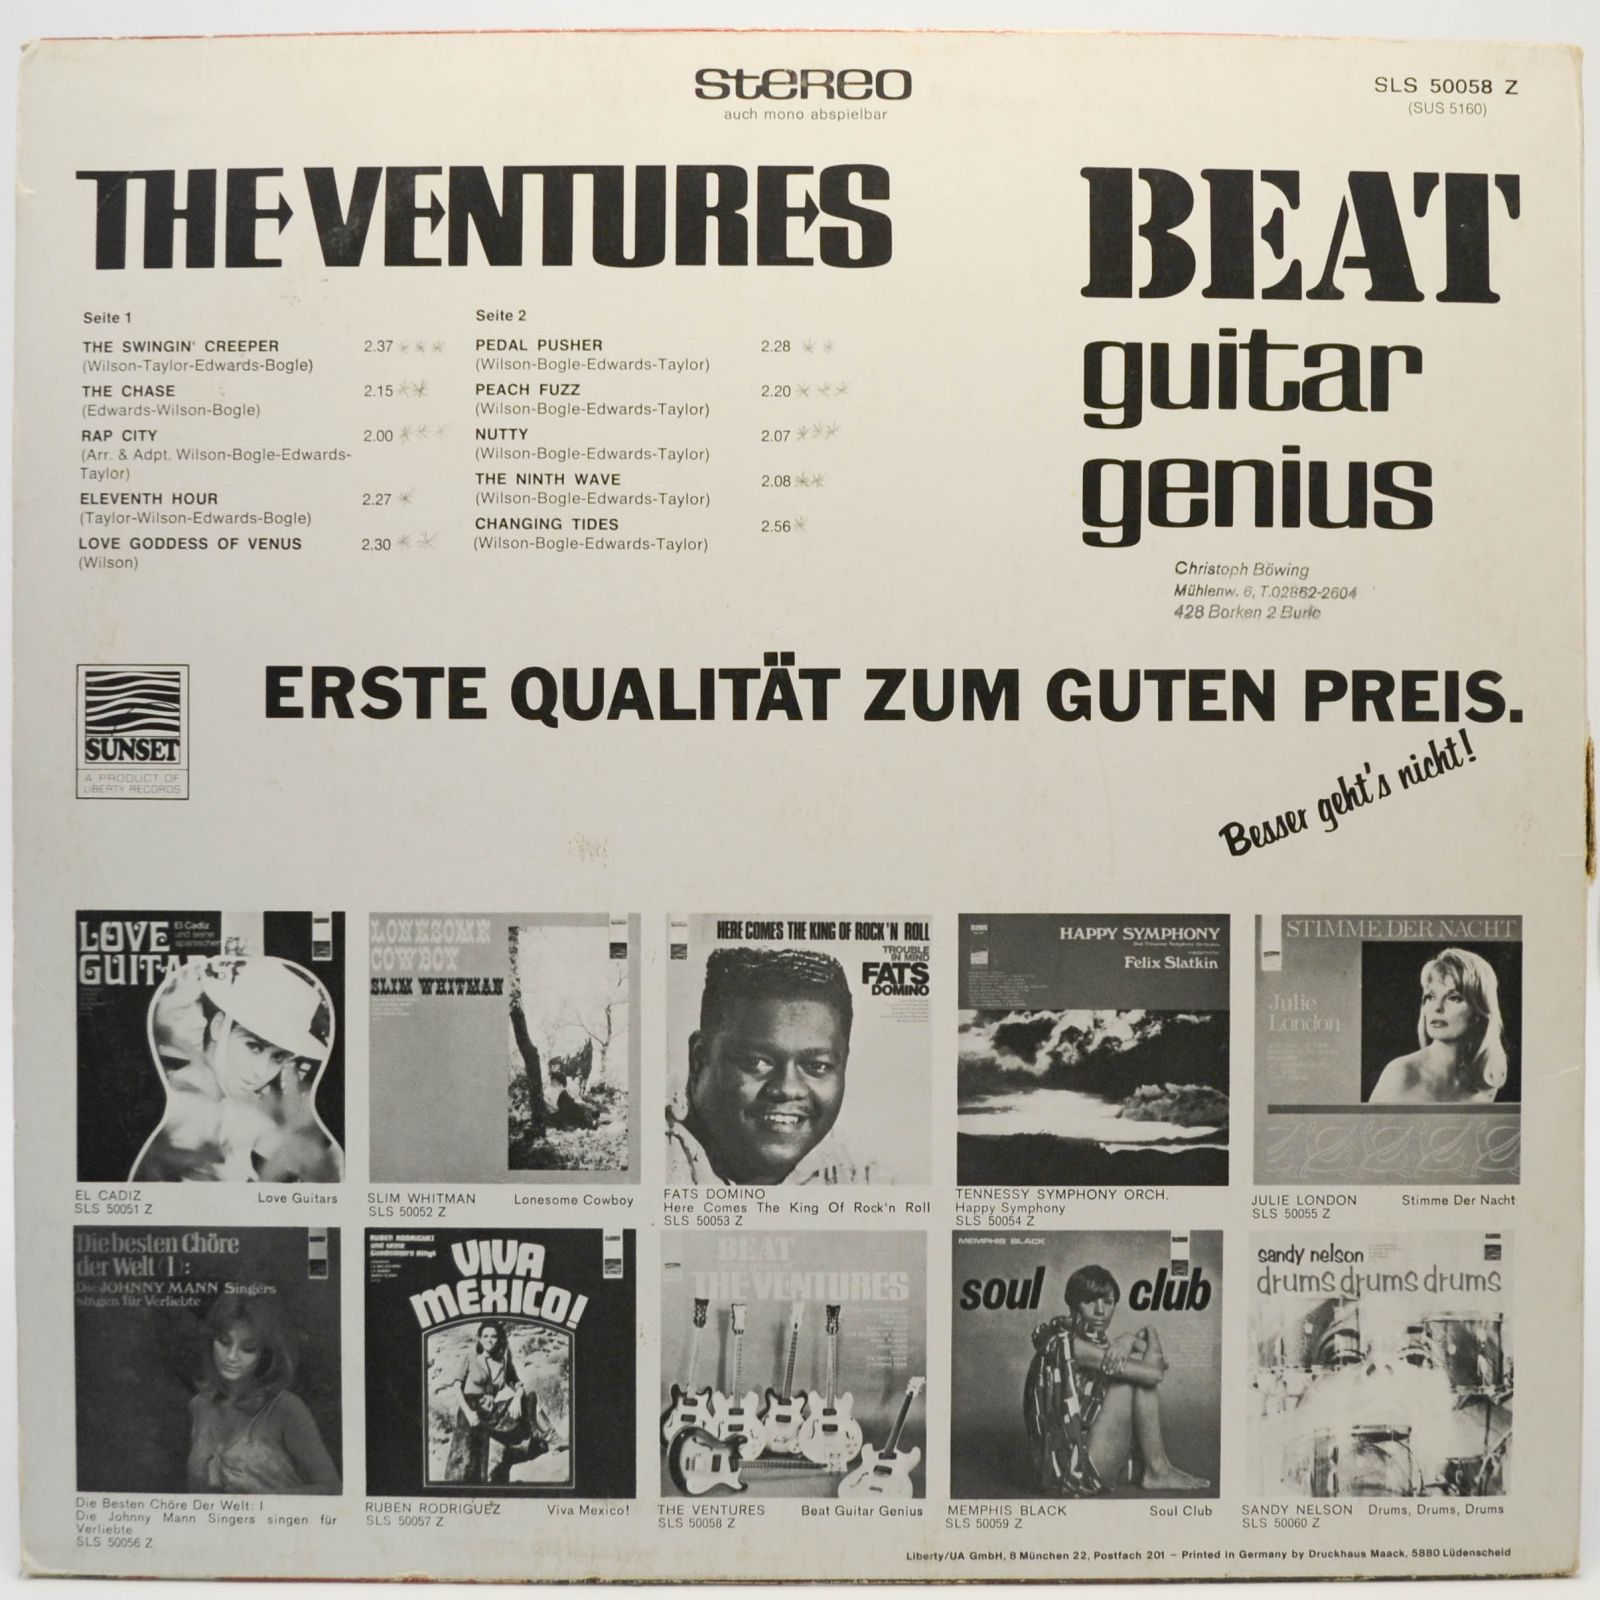 Ventures — Beat Guitar Genius Of The Ventures, 1967